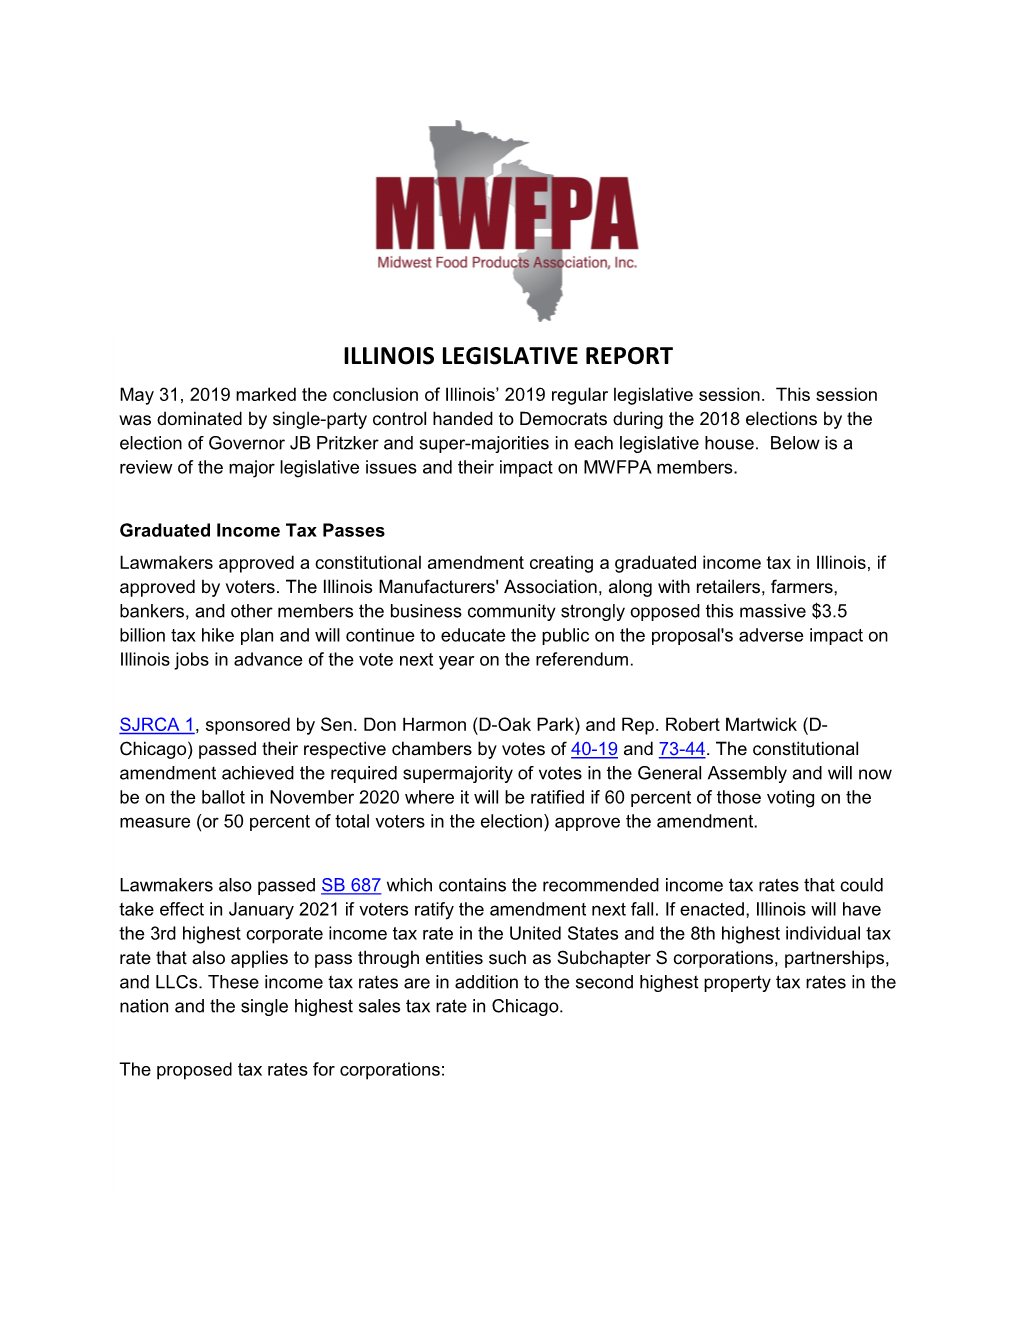 ILLINOIS LEGISLATIVE REPORT May 31, 2019 Marked the Conclusion of Illinois’ 2019 Regular Legislative Session